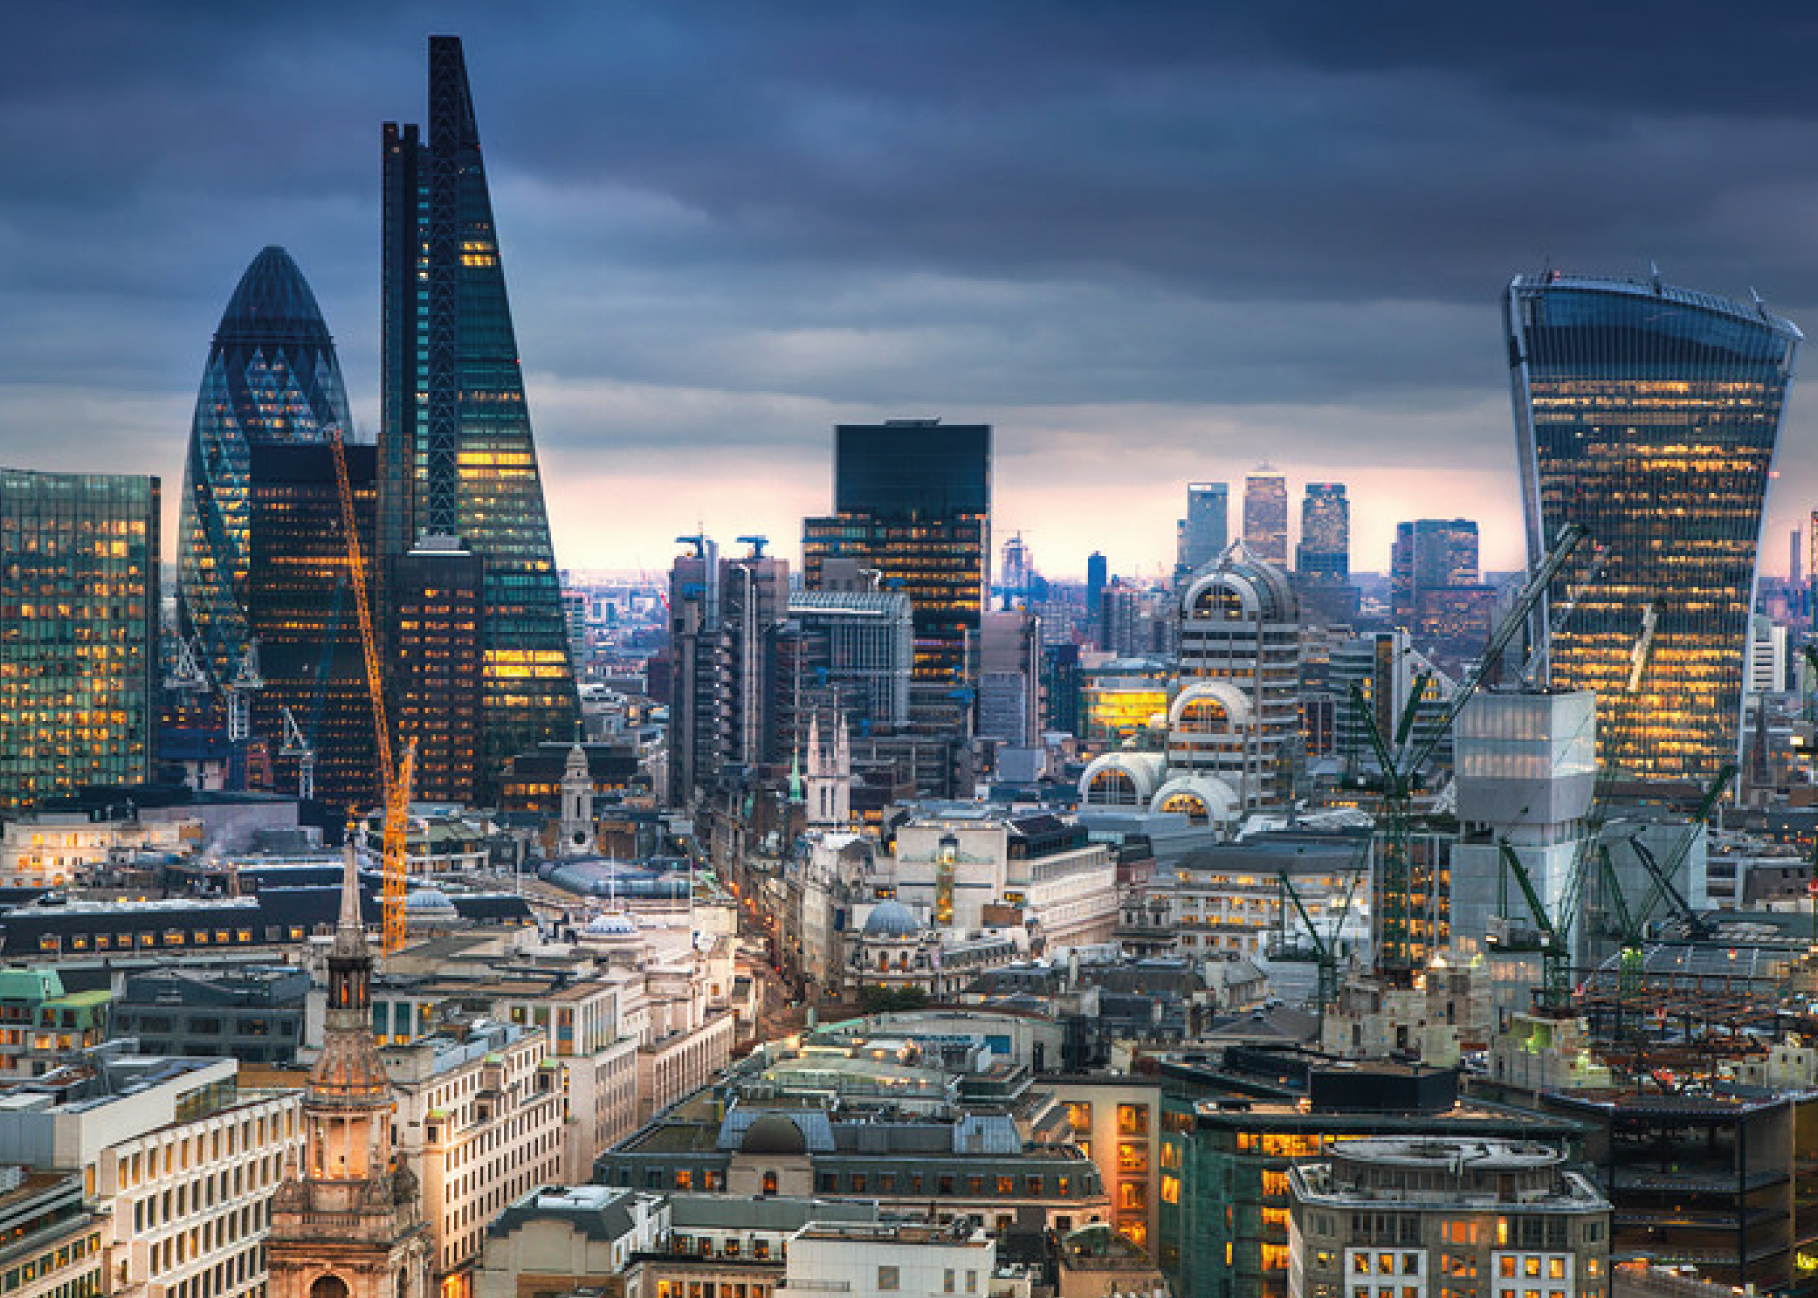 London Office Construction at ‘highest level since referendum’